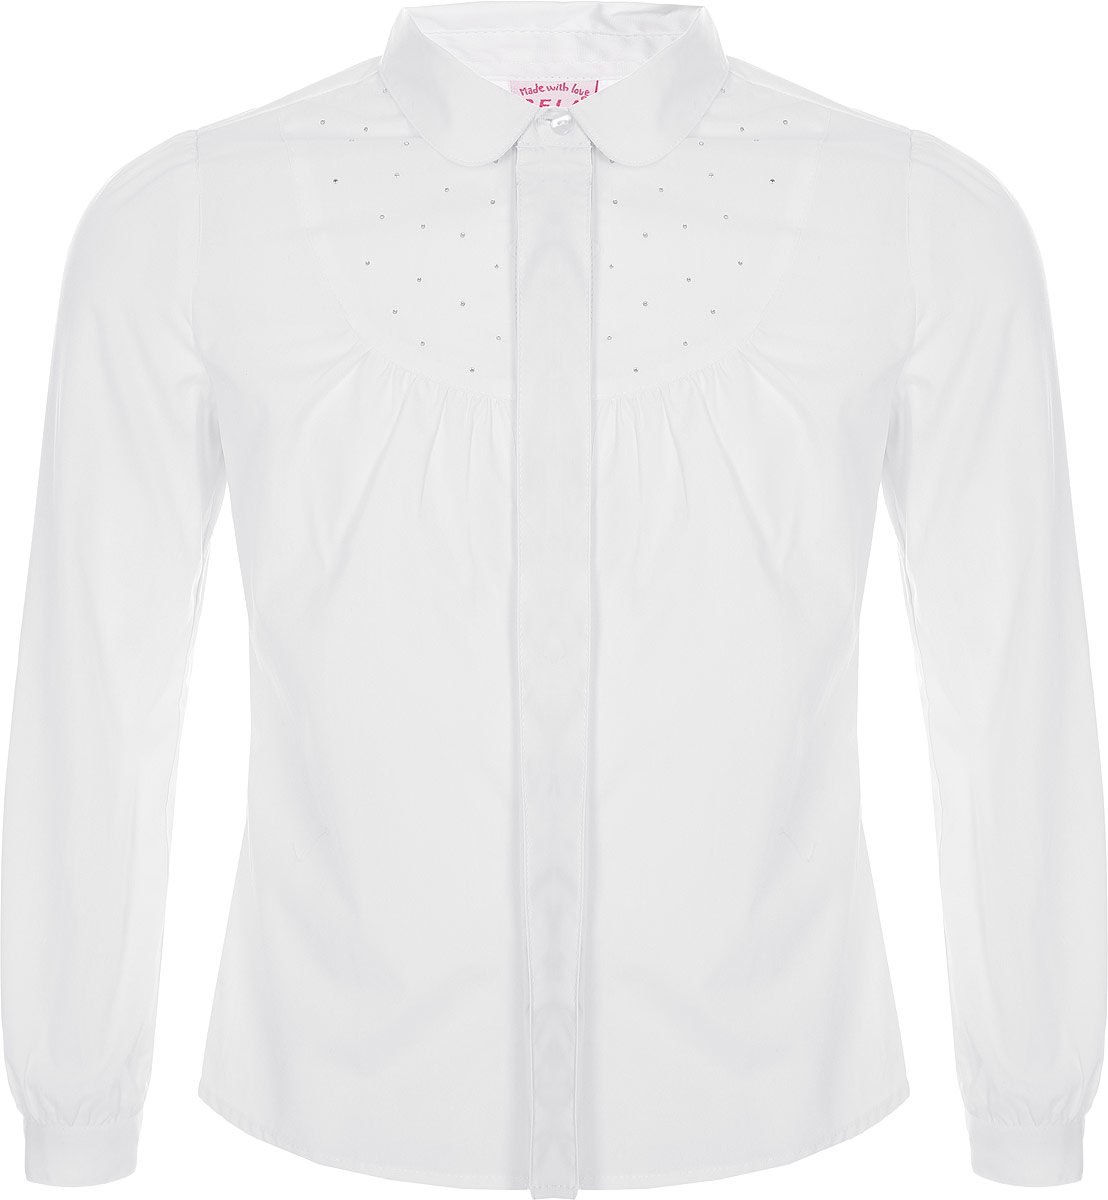 Блузка для девочки Sela, цвет: белый. B-612/1008-8310. Размер 128